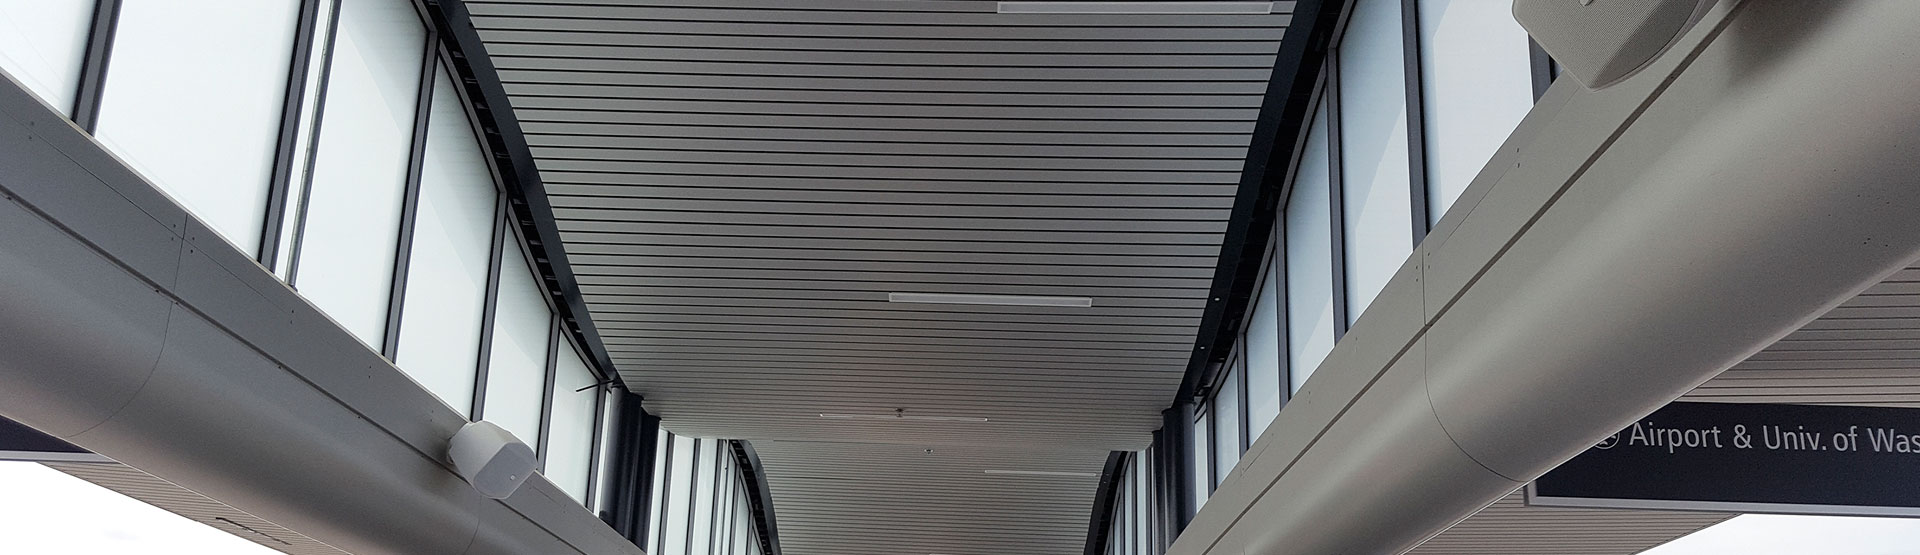 airport metal ceiling